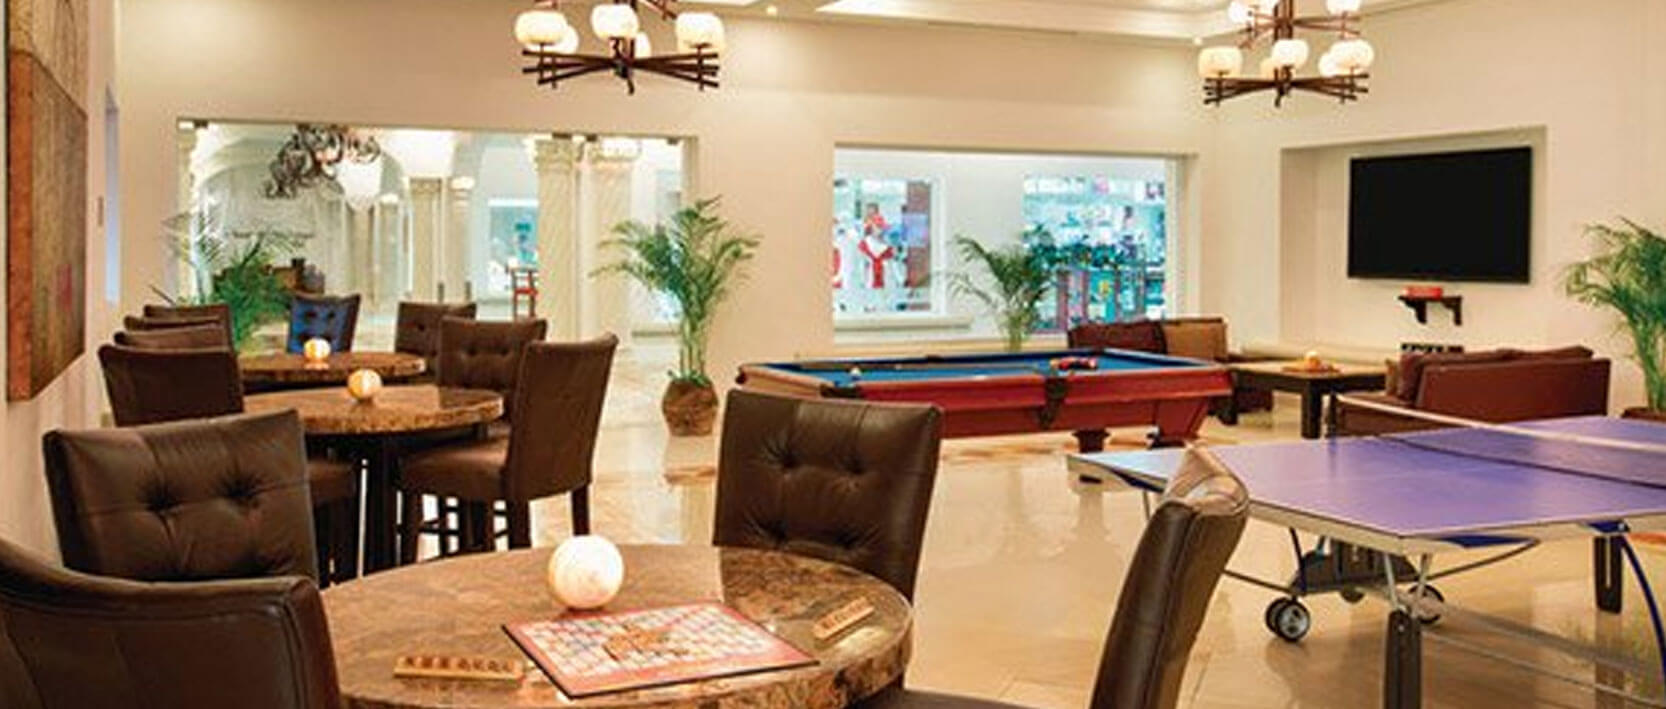 Hyatt Zilara Cancun Restaurants and Bars - 24 Hour Lounge